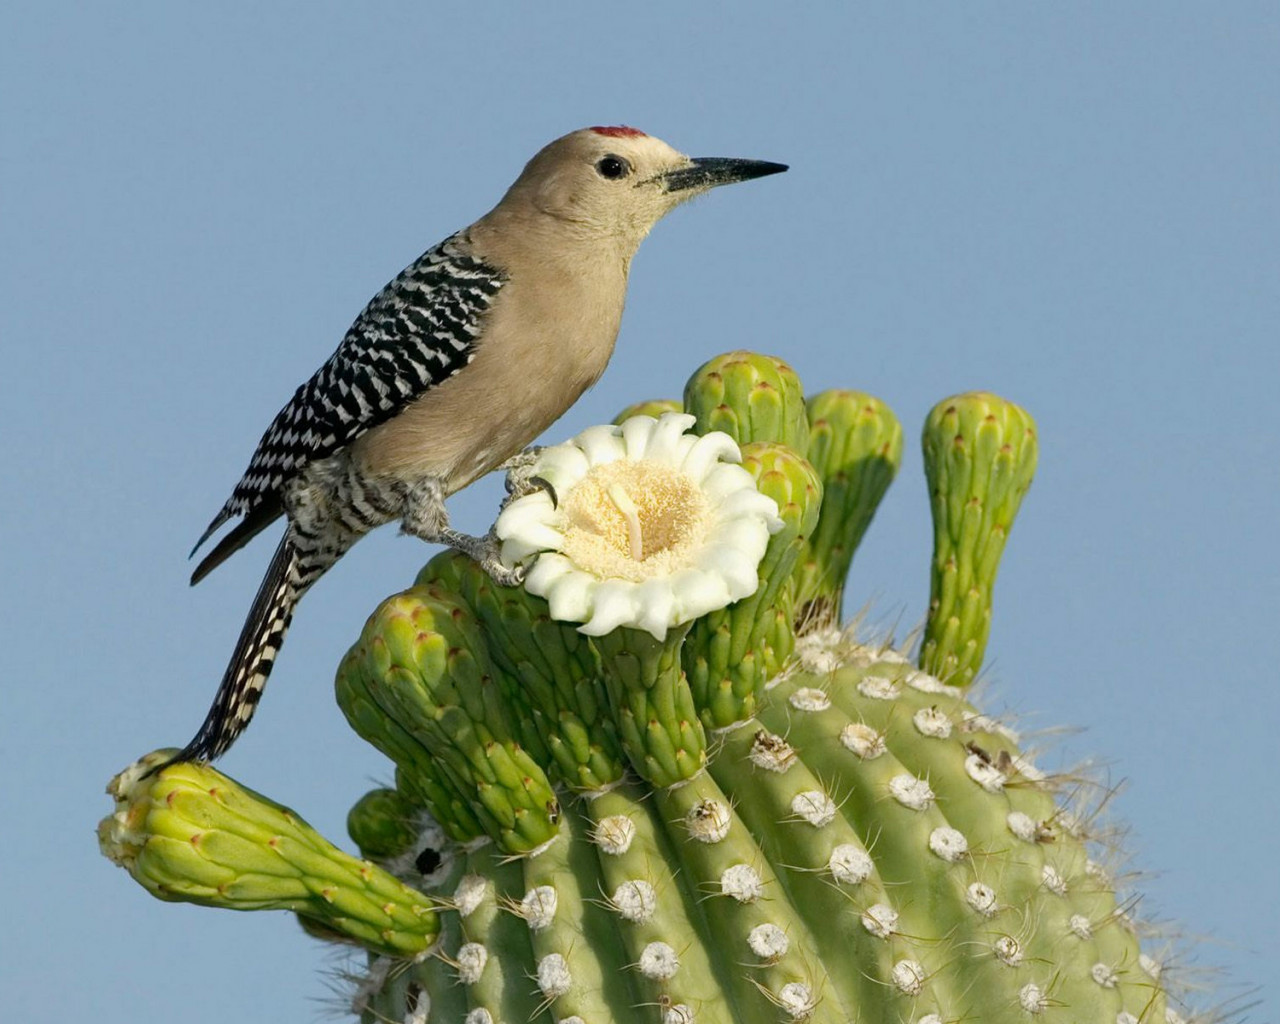 Ptaszek na kaktusie